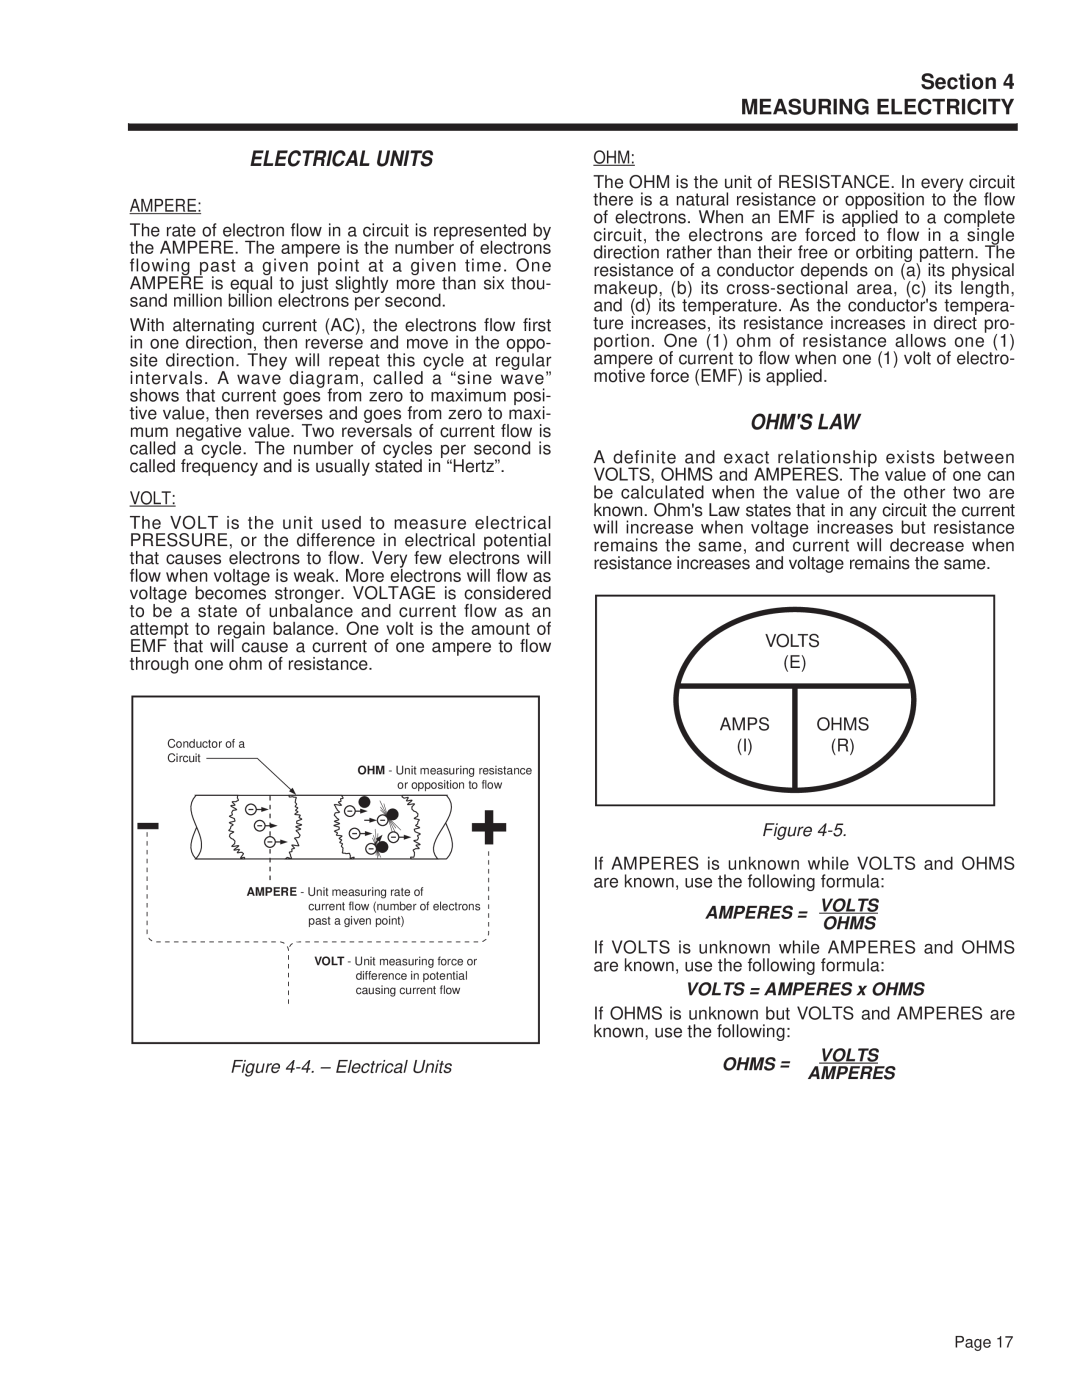 Guardian Technologies 4270 manual Ohms Law, 4. - Electrical Units, Amperes = Voltsohms, VOLTS = AMPERES x OHMS, Ohms = 